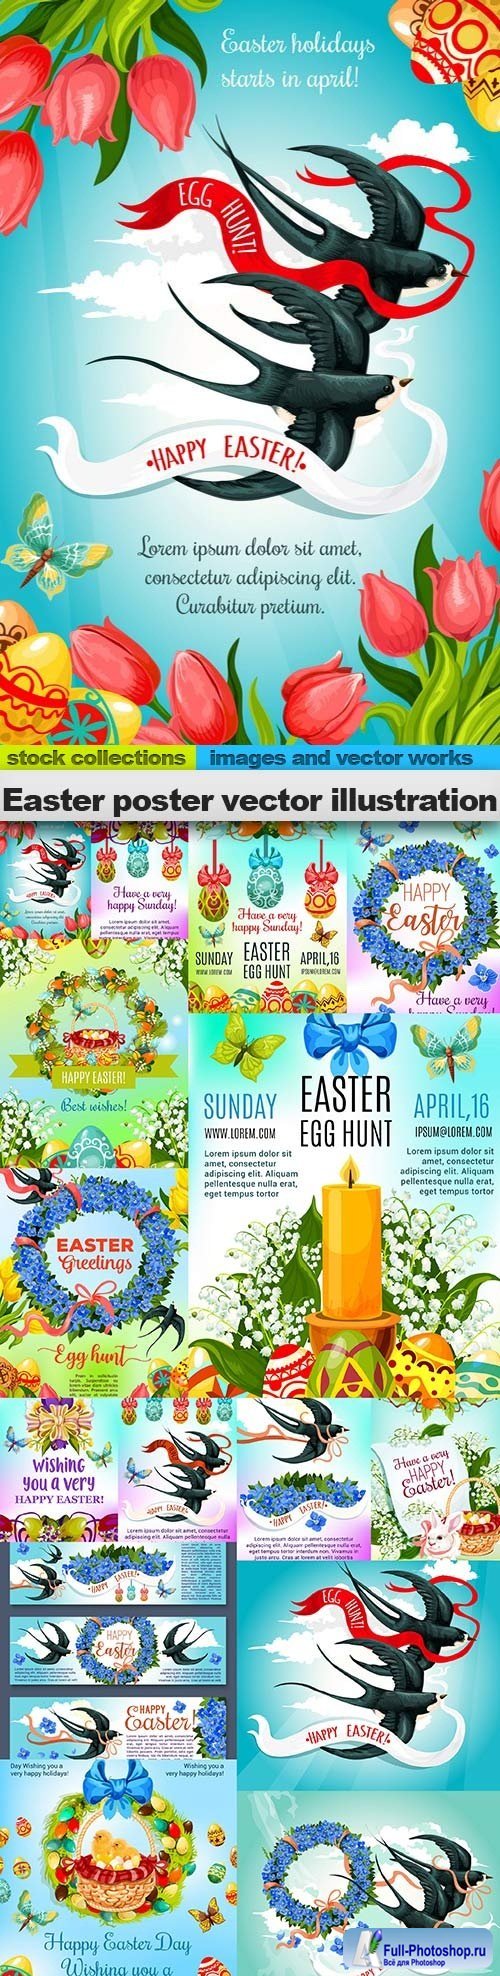 Easter poster vector illustration, 15 X EPS